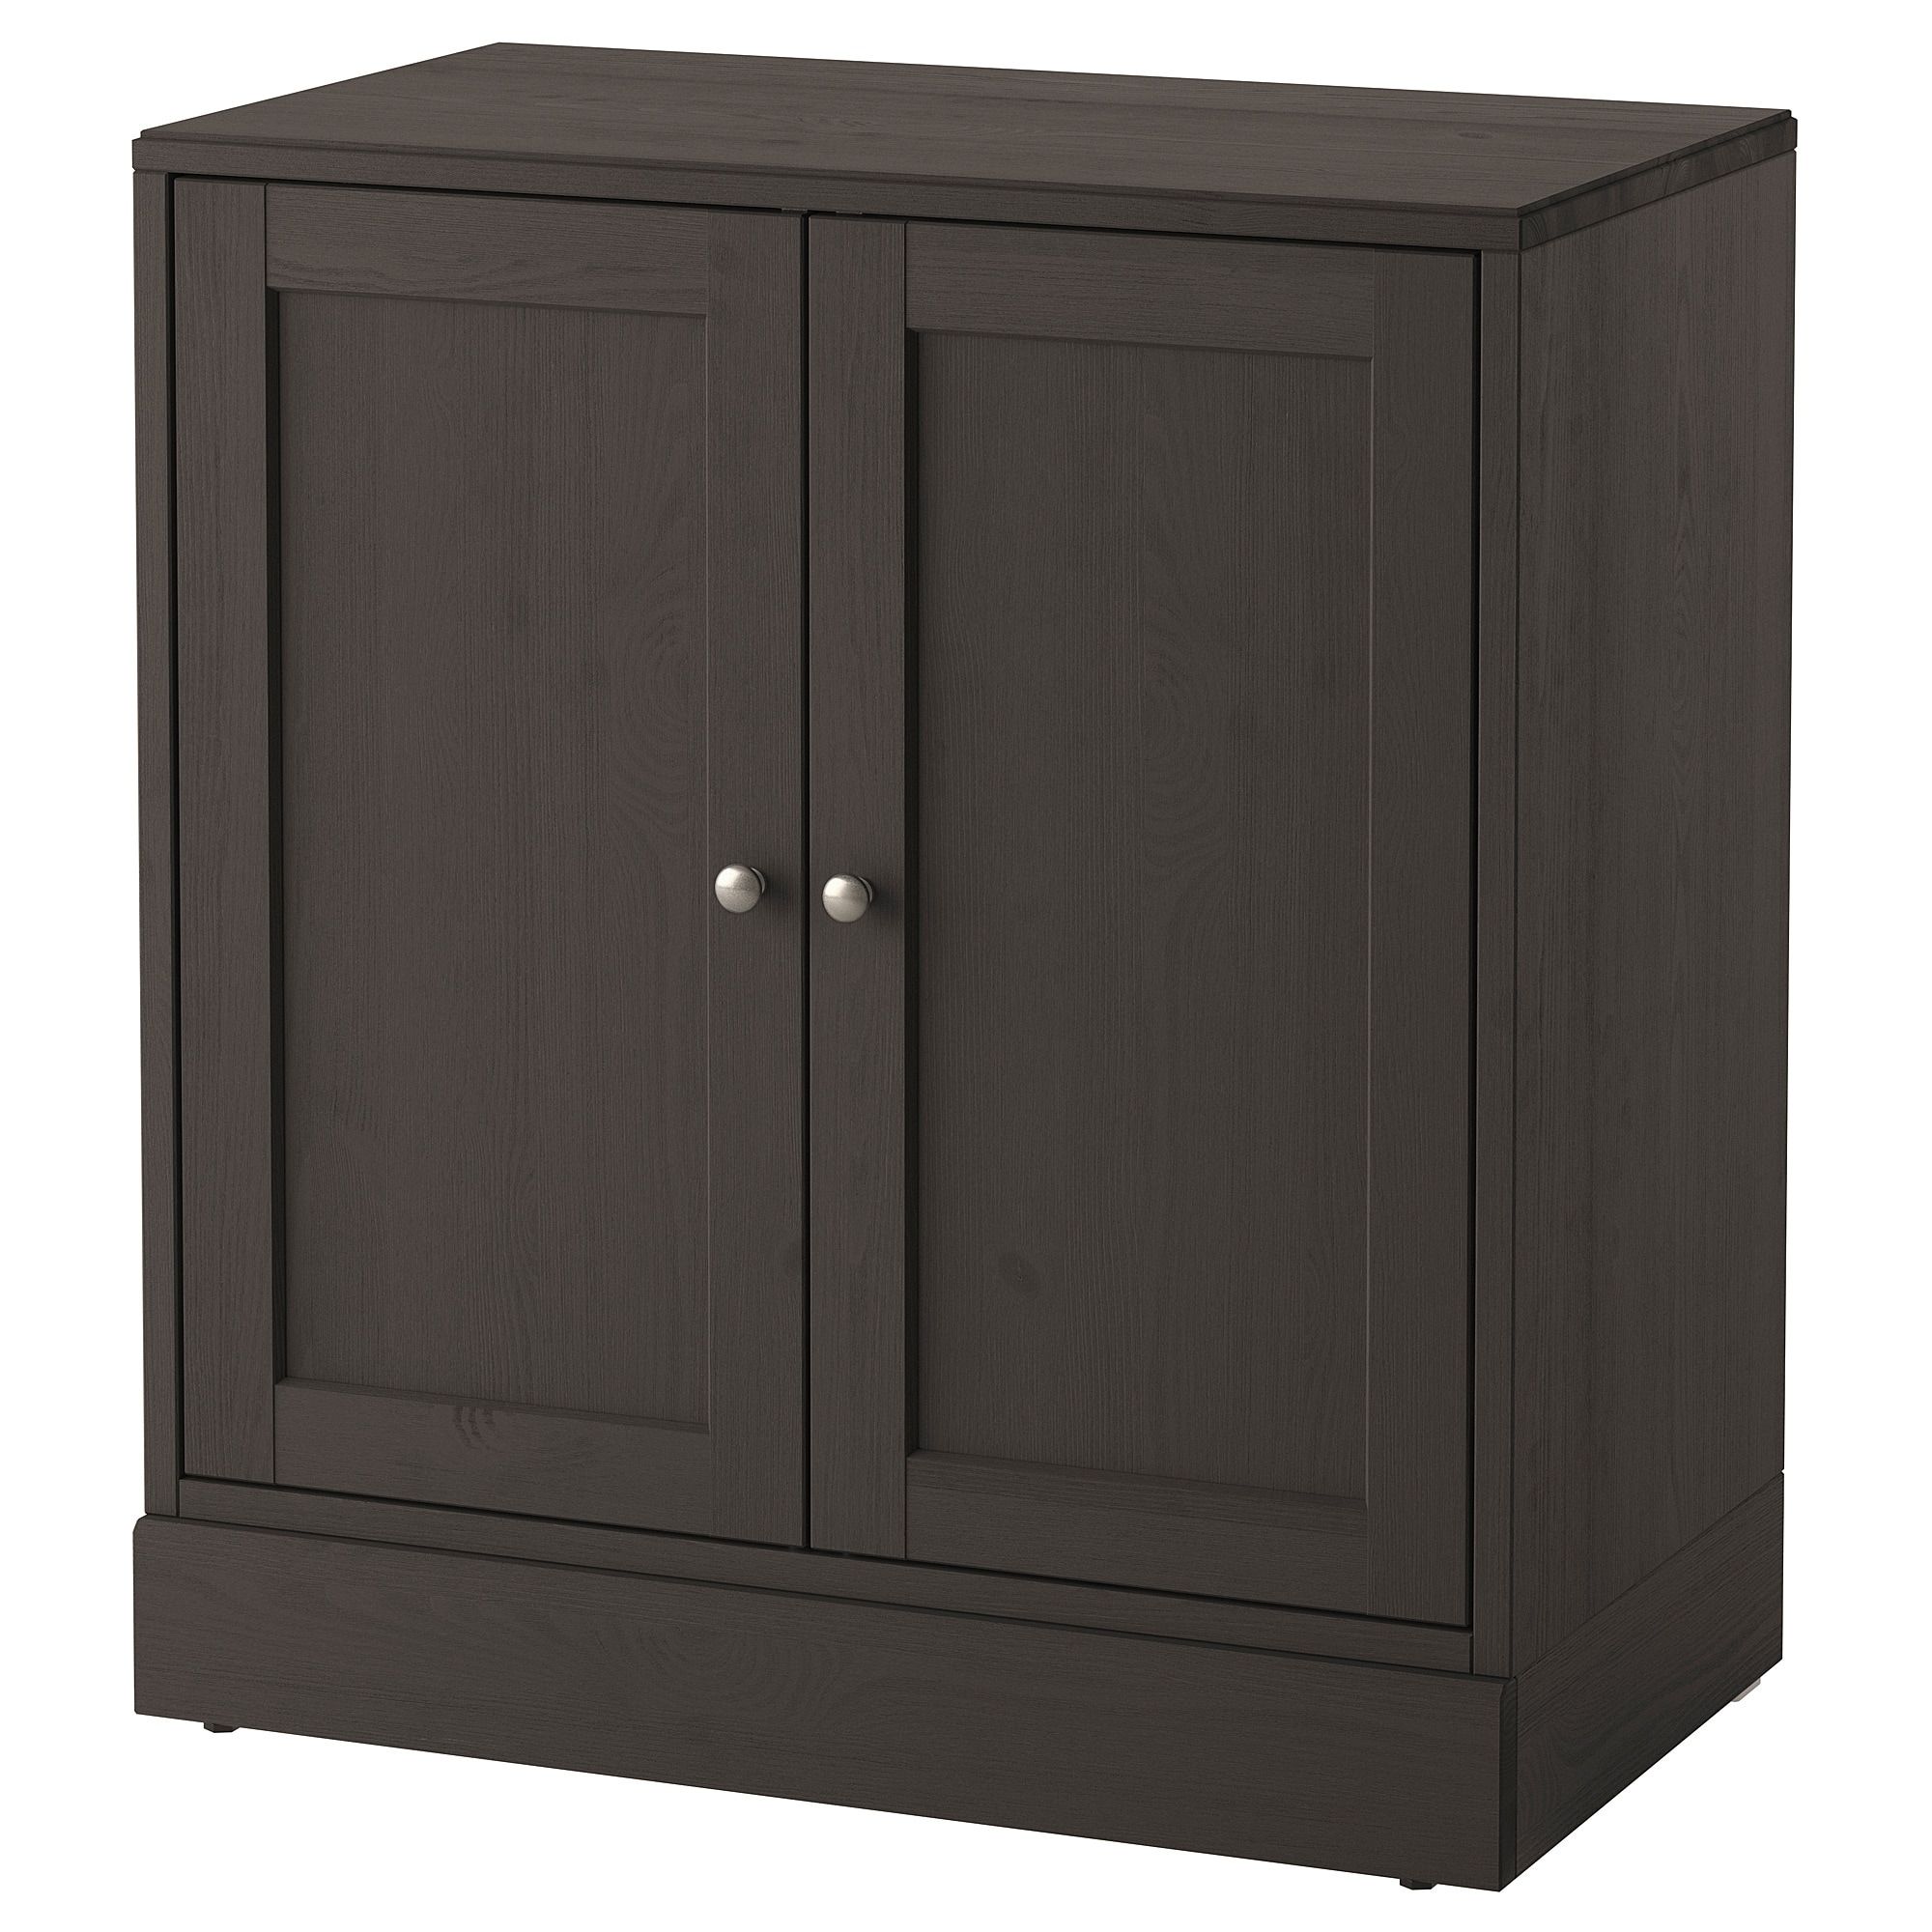 Storage Cabinets & Storage Cupboards | Ikea Ireland With Regard To 2017 Black Burnt Oak Sideboards (View 7 of 20)